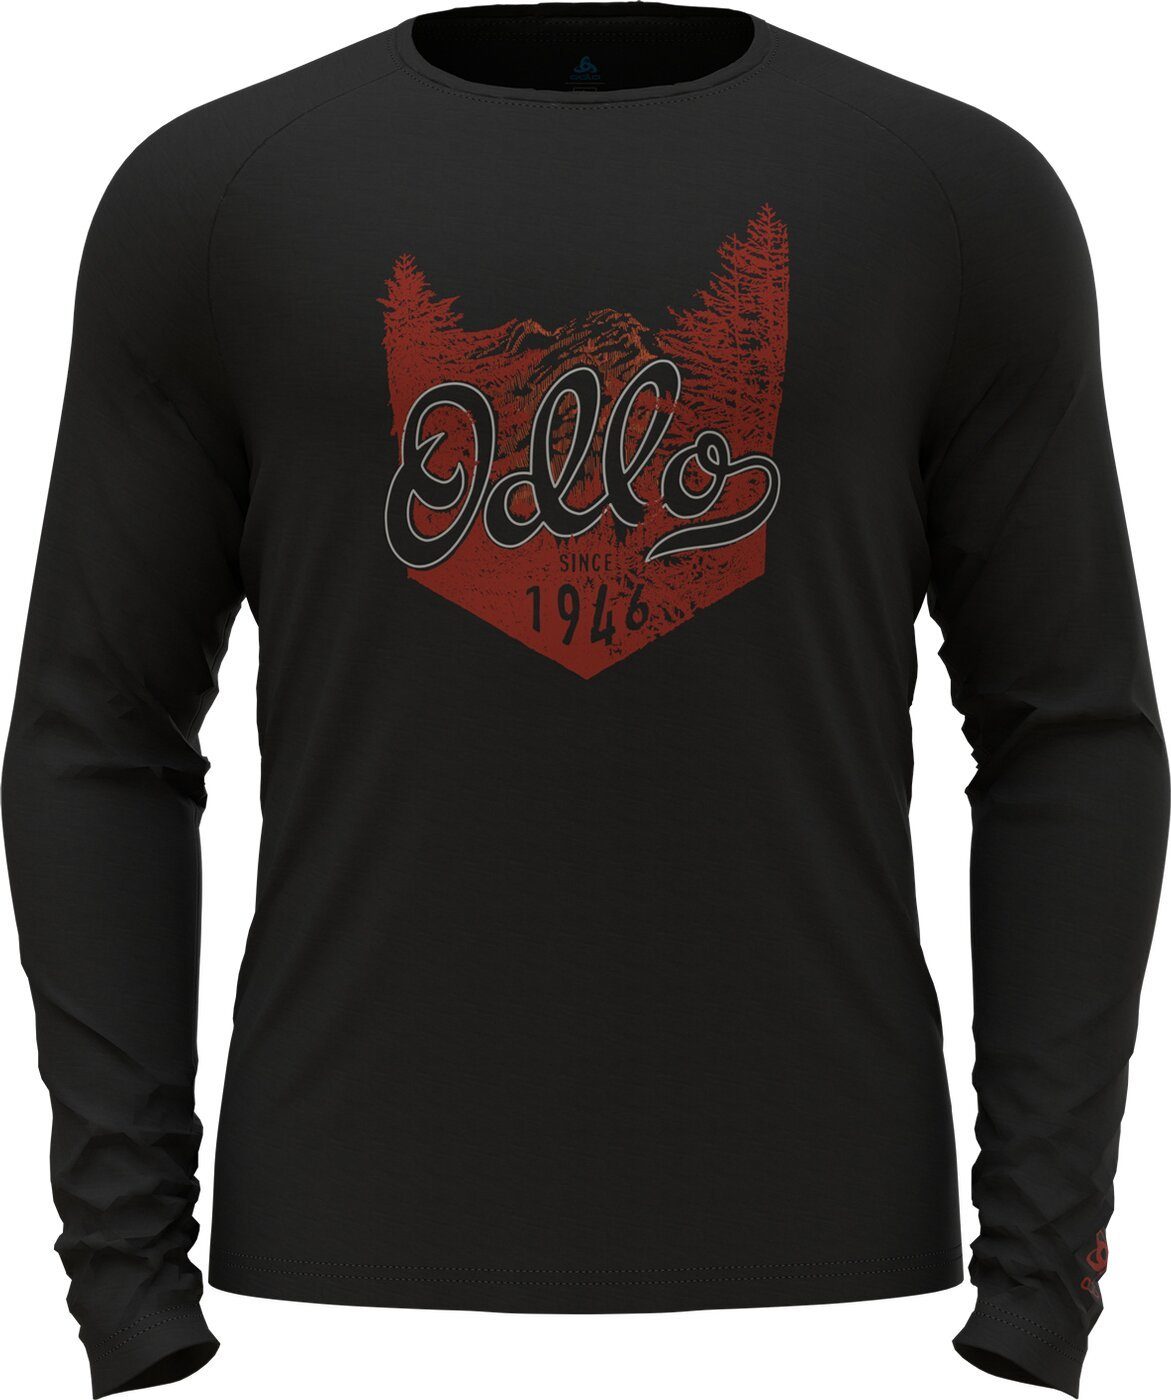 Odlo Longsleeve T-shirt crew neck l/s MERINO 2 15000 black